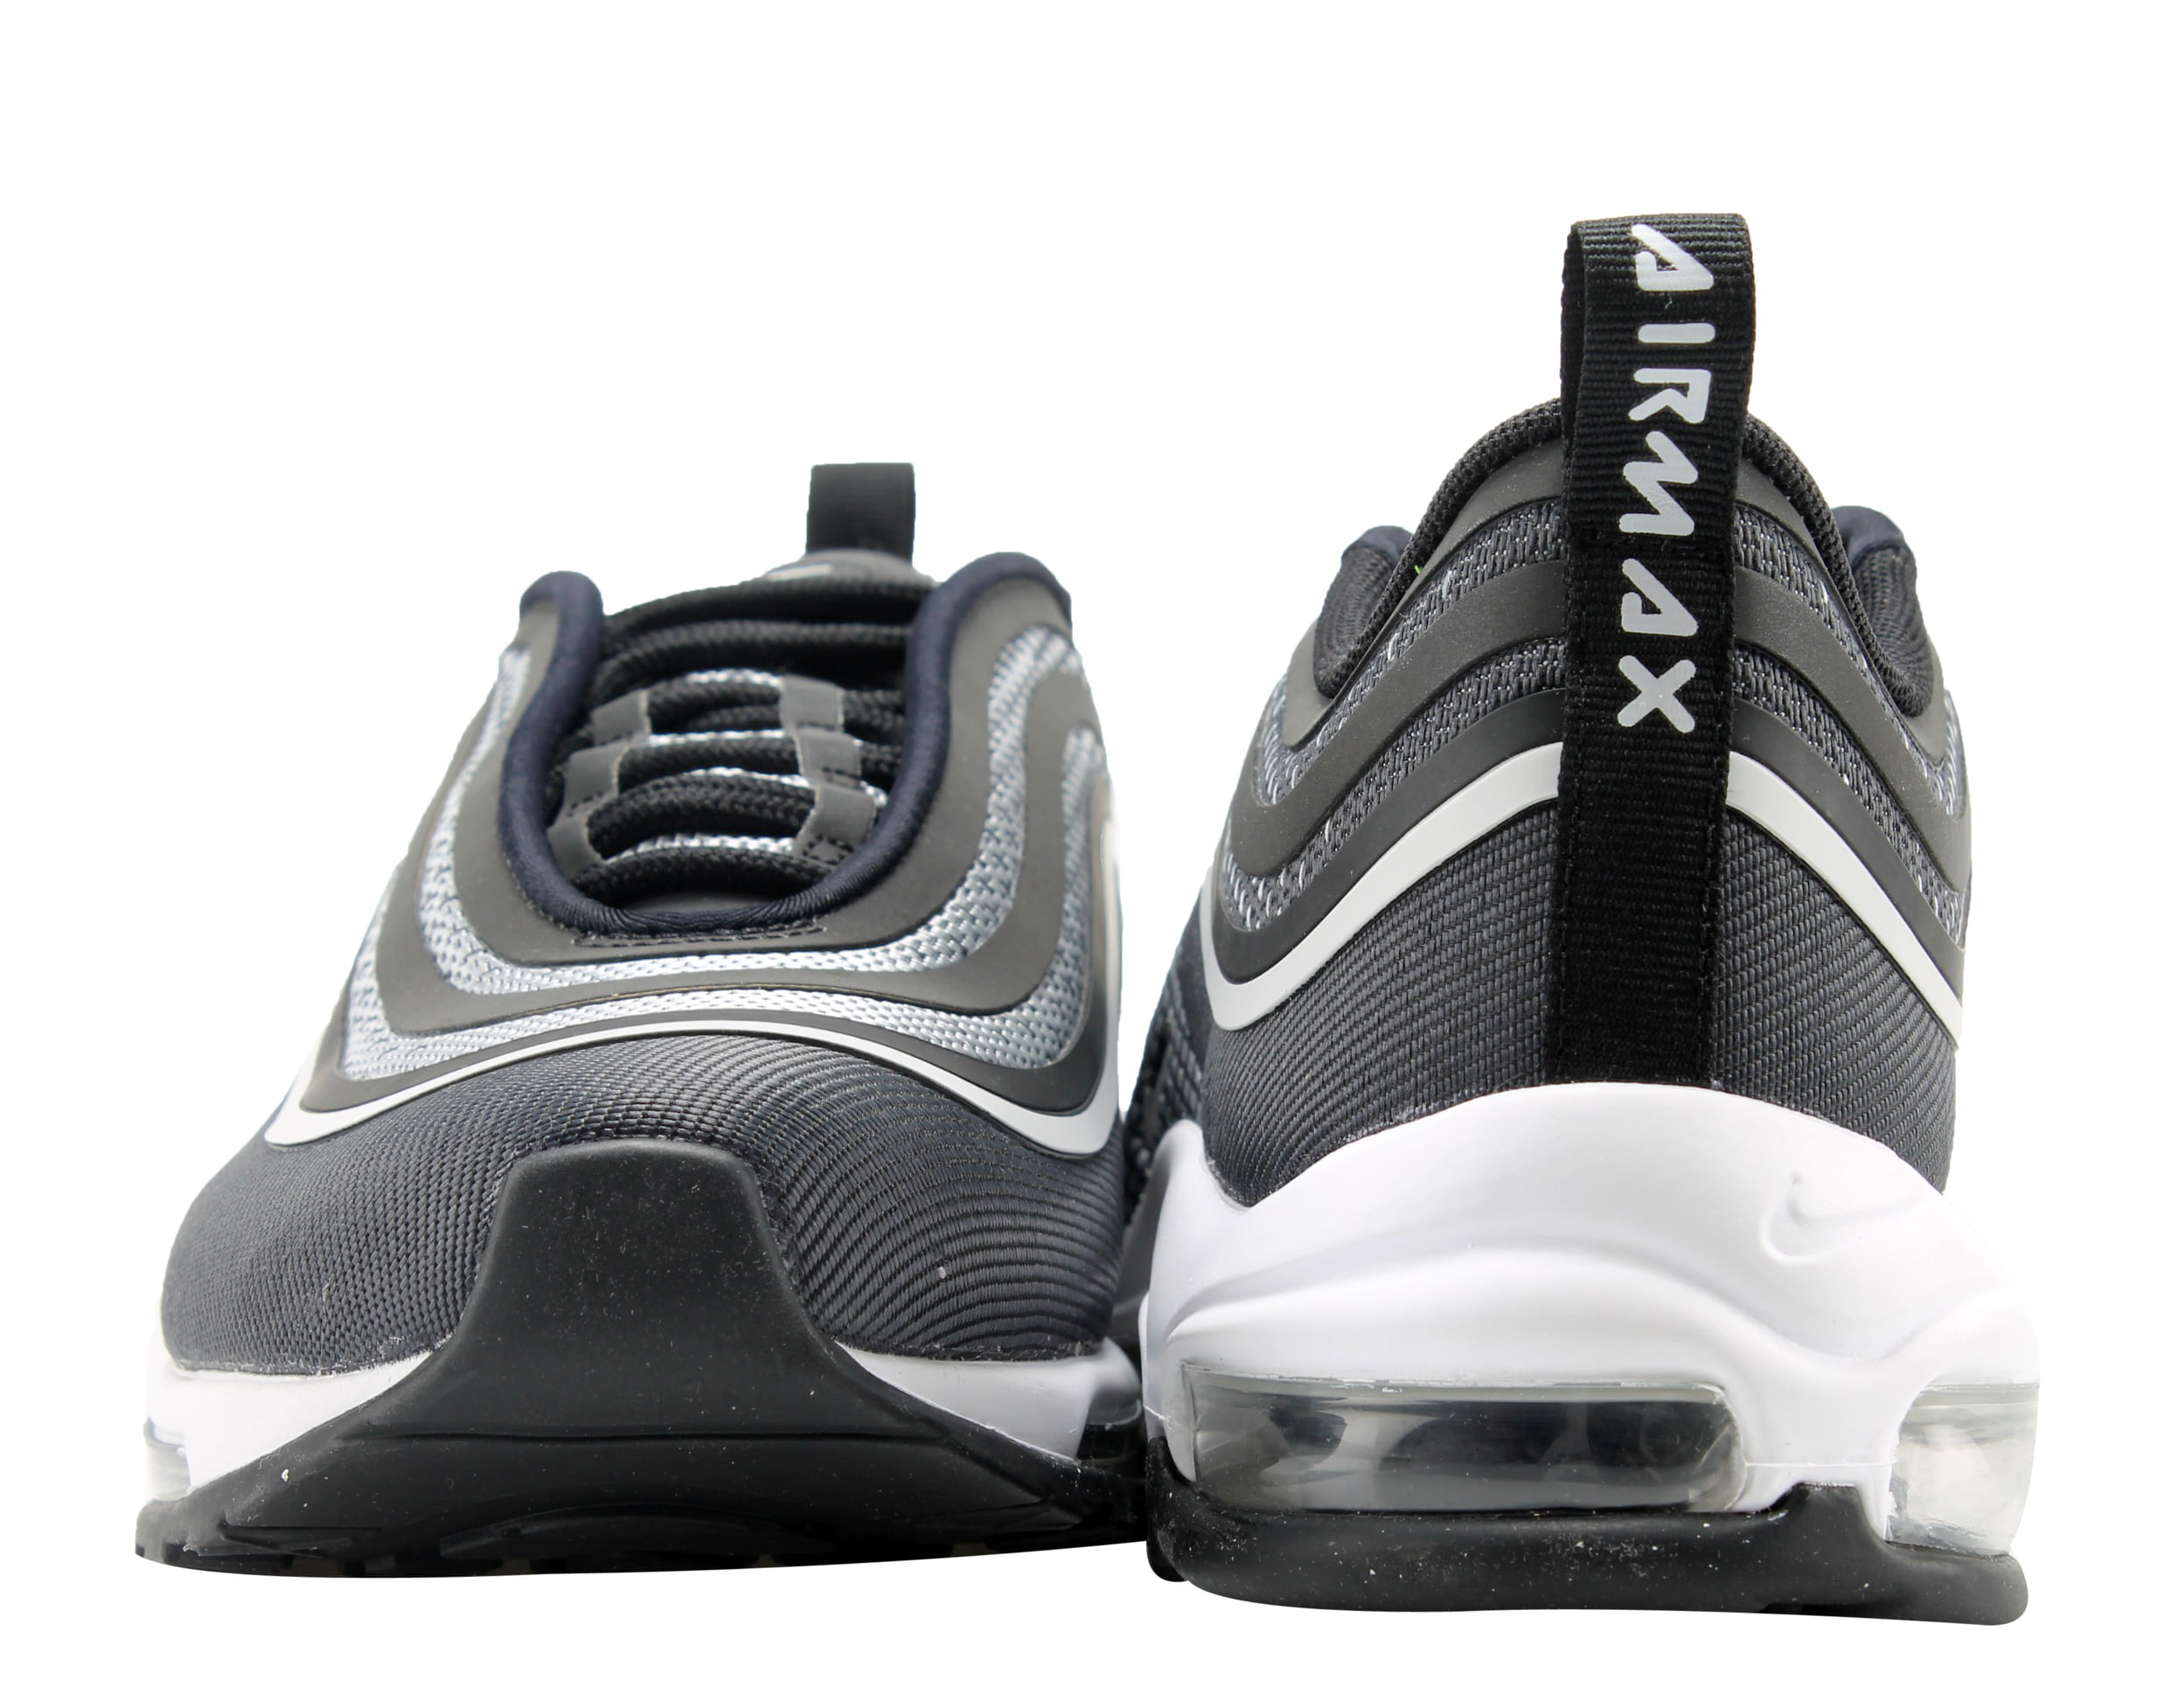 Nike Air Max 97 Ultra '17 Black/Pure Platinum Men's Running Shoes 918356-001